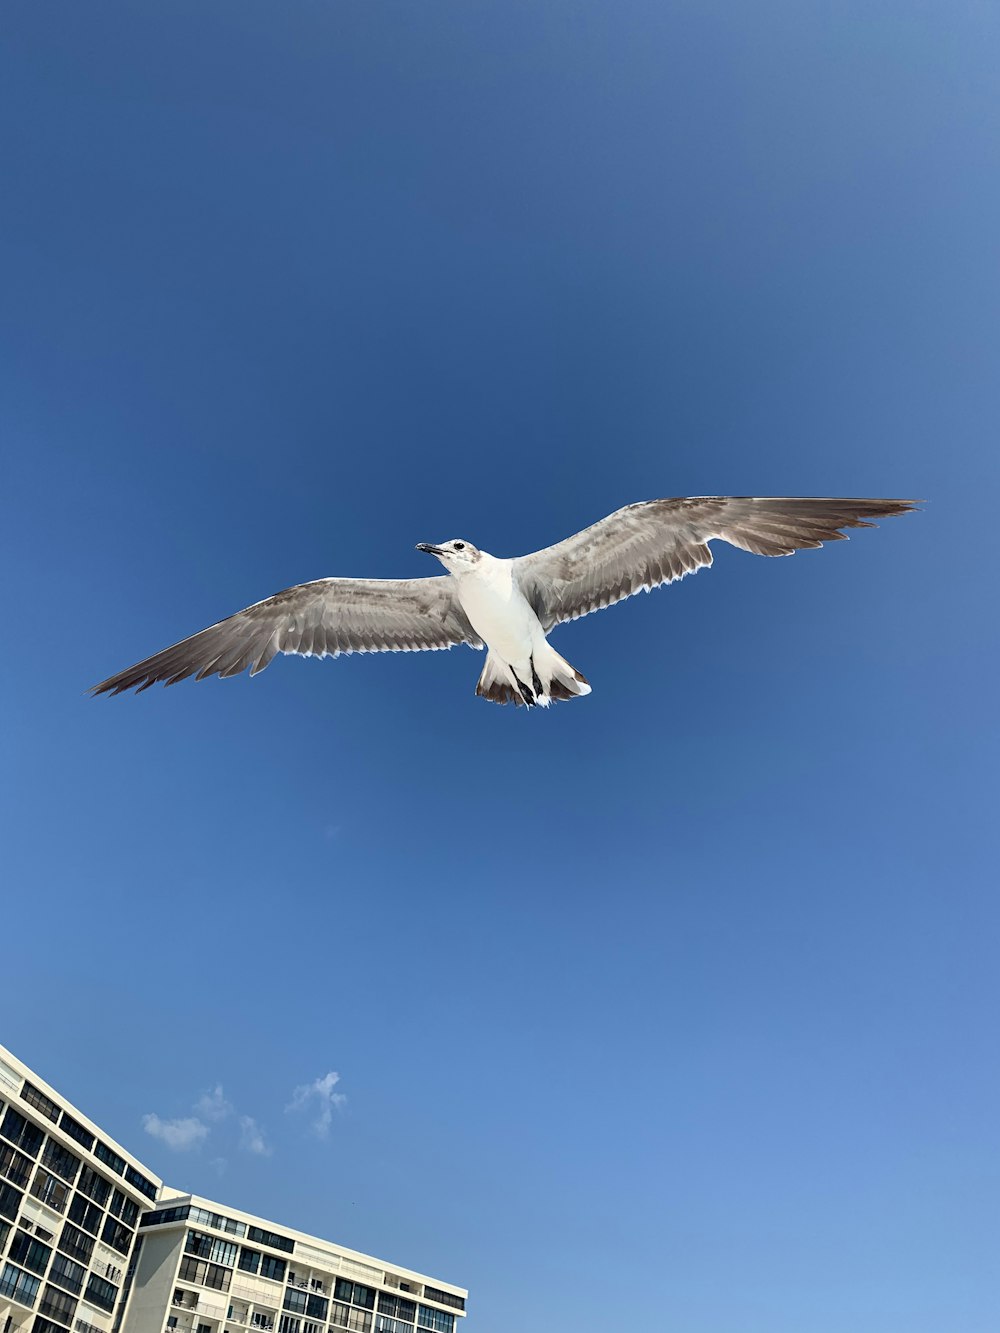 white seagull flying near building